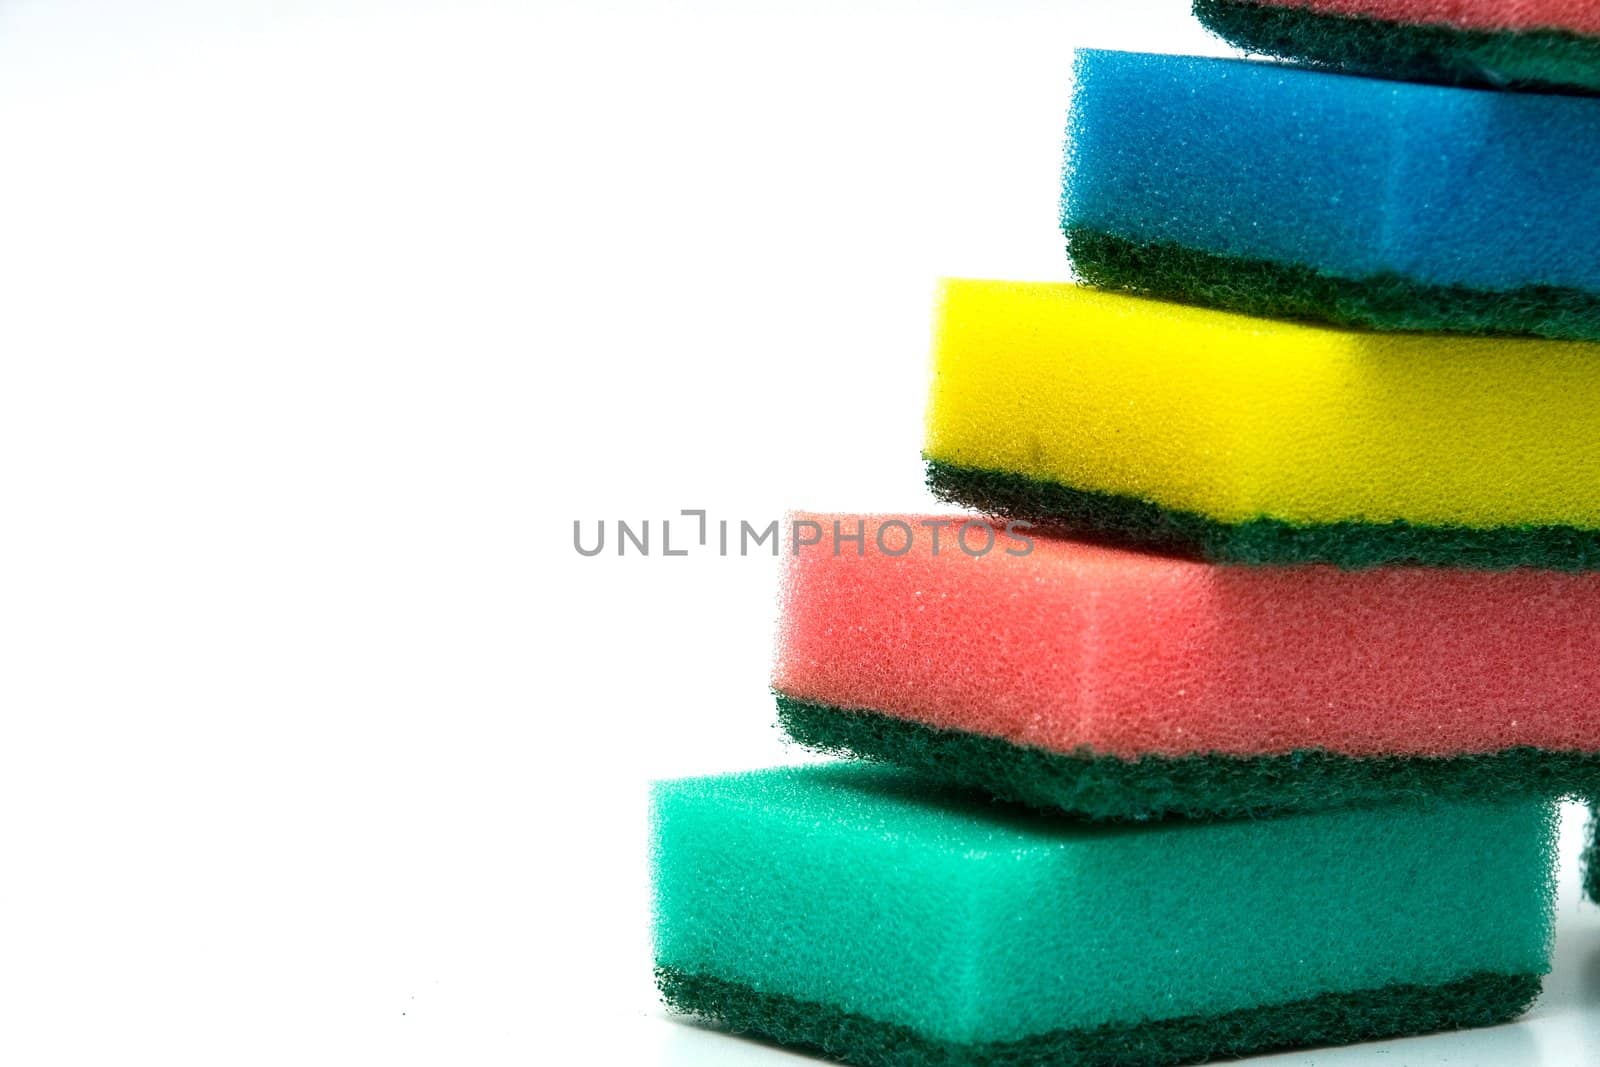 Color sponges by Vladimir